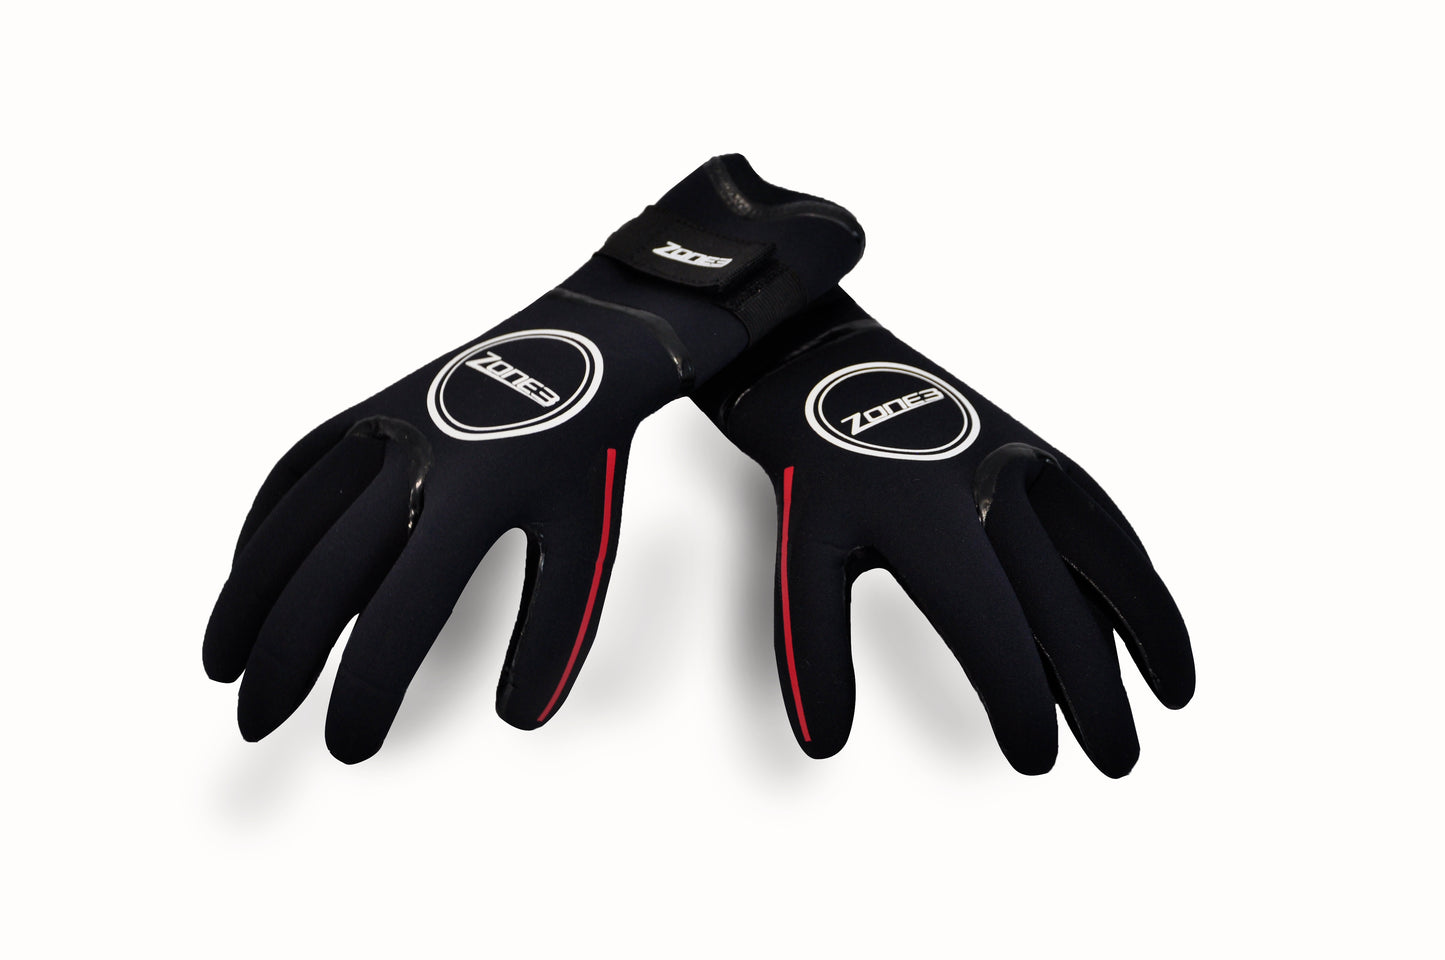 Zone 3 - Neoprene Heat-Tech Warmth Swim Gloves